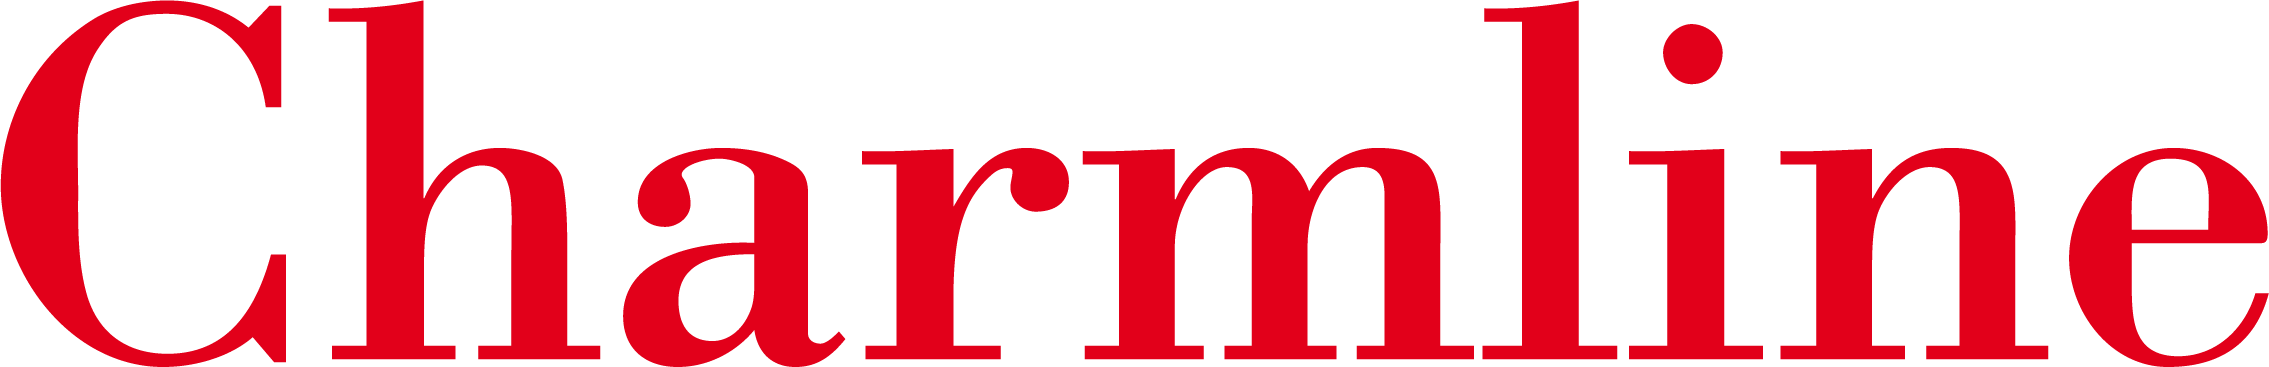 Logo Charmline